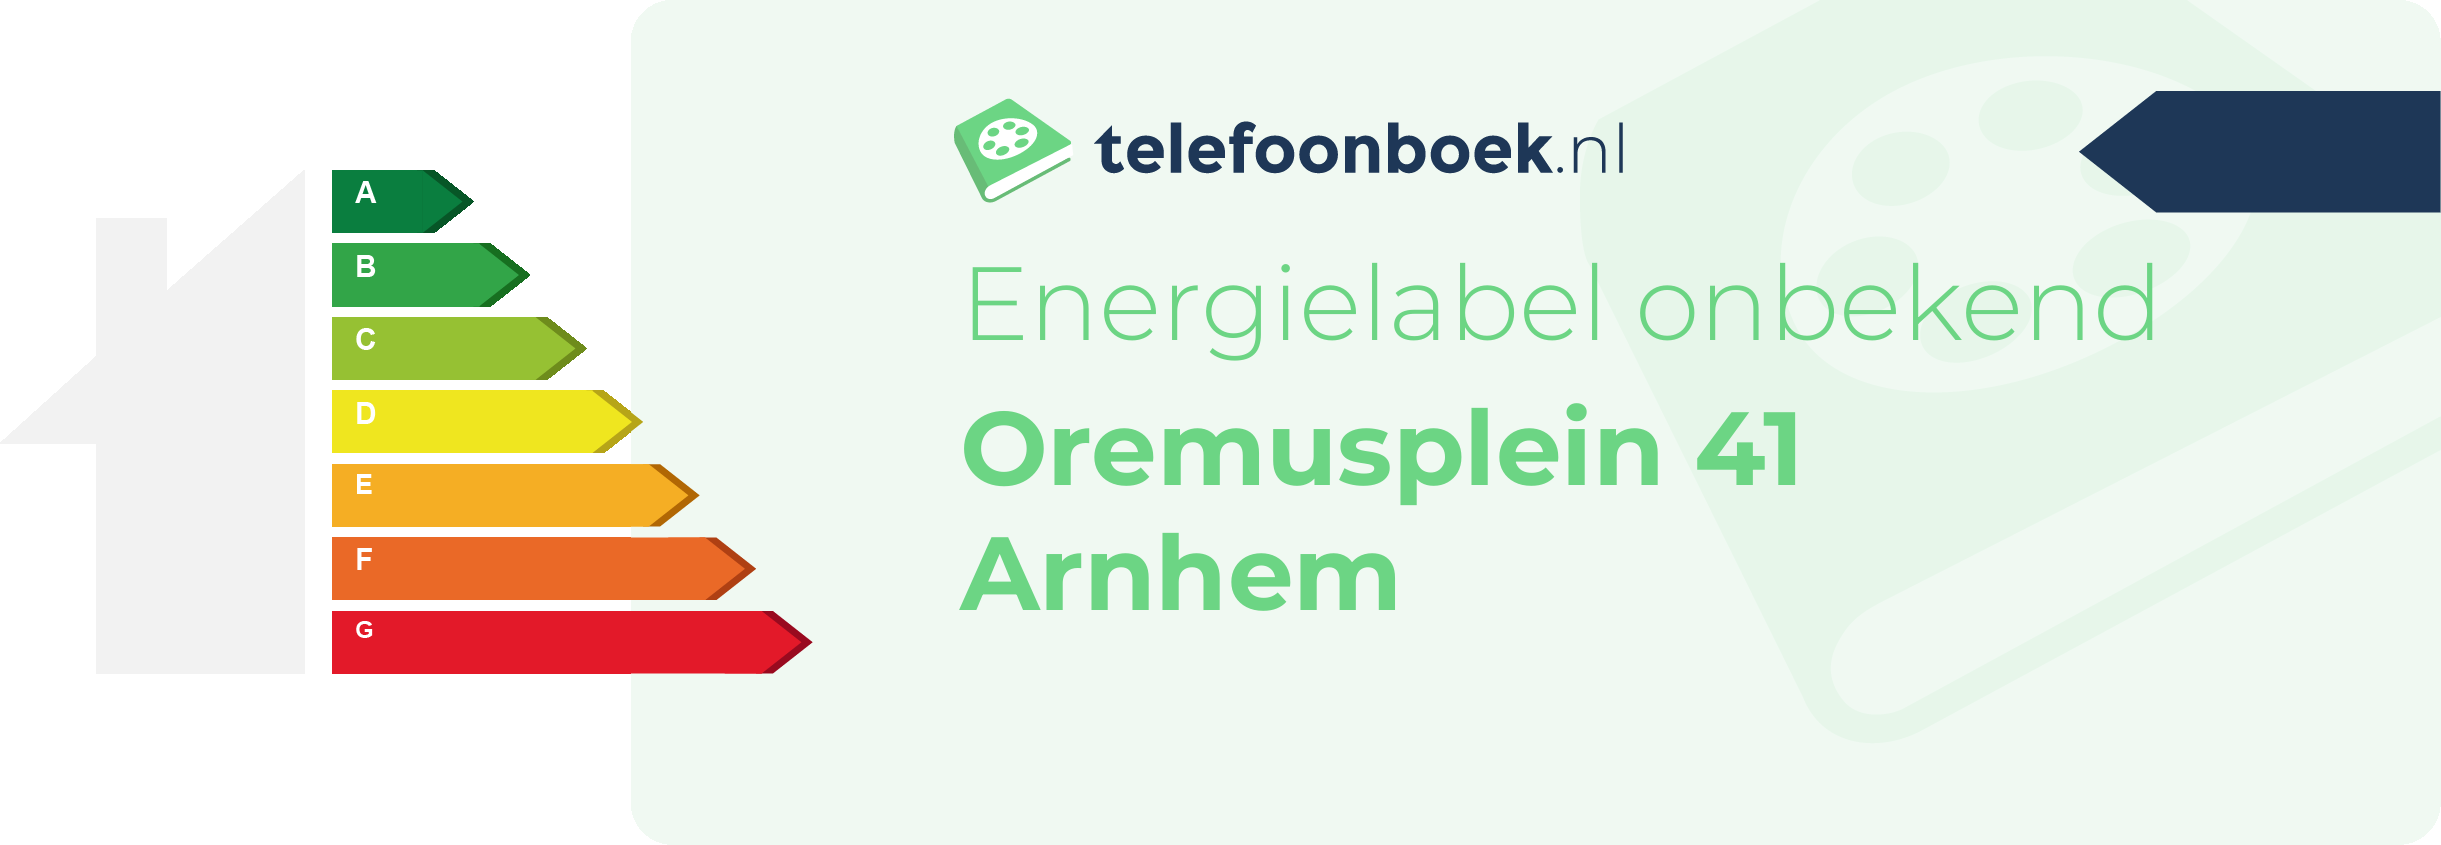 Energielabel Oremusplein 41 Arnhem